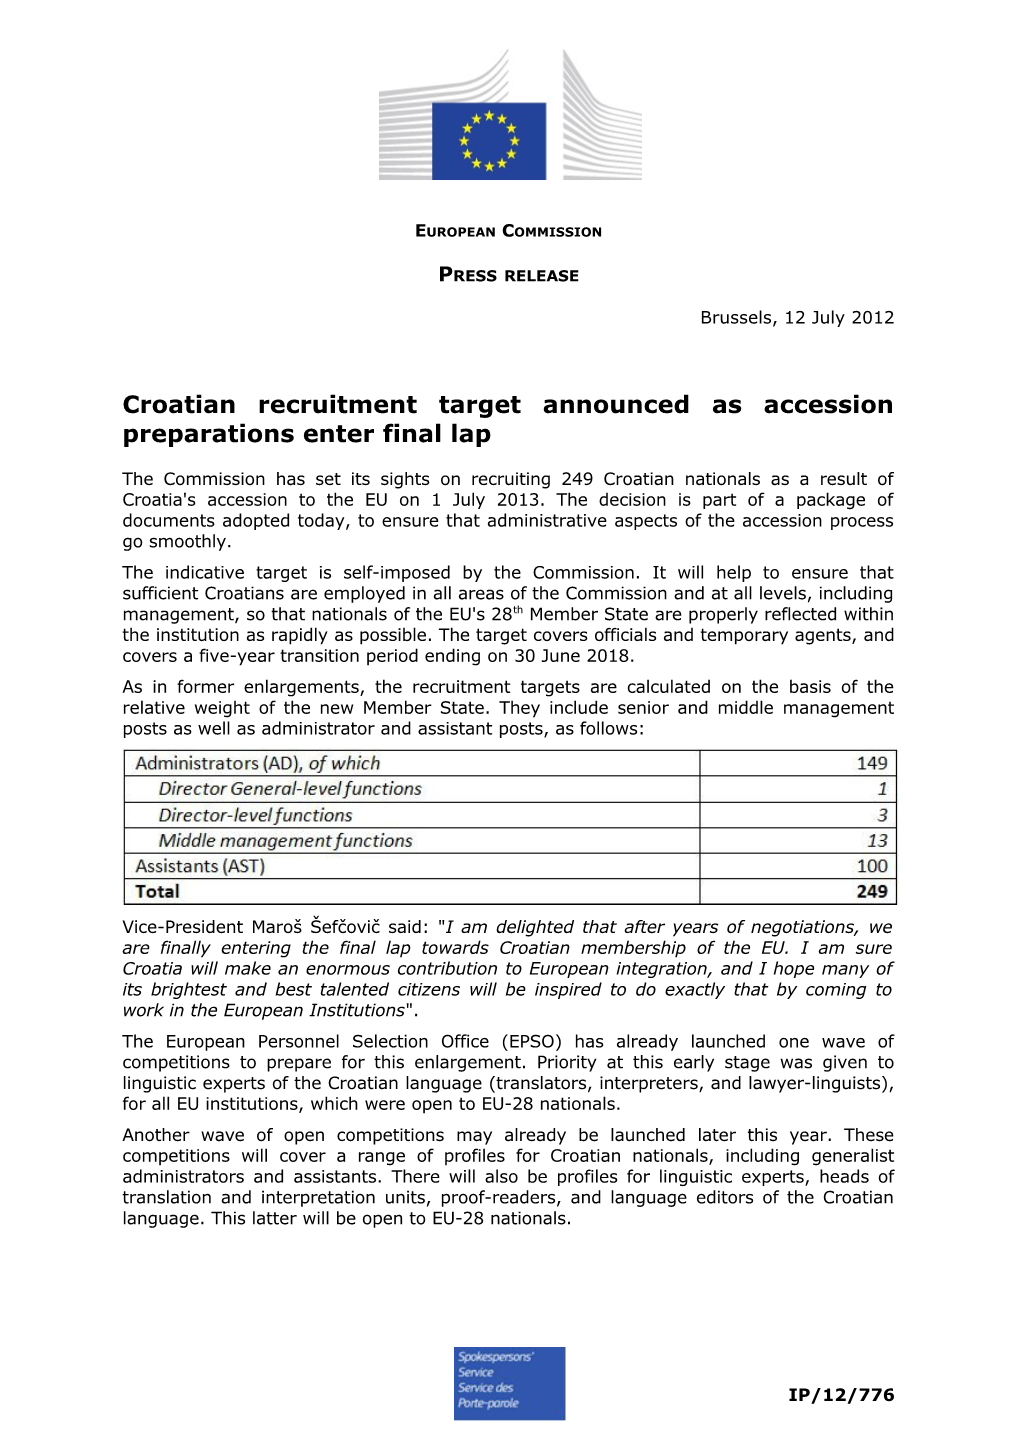 Croatian Recruitment Target Announced As Accession Preparations Enter Final Lap